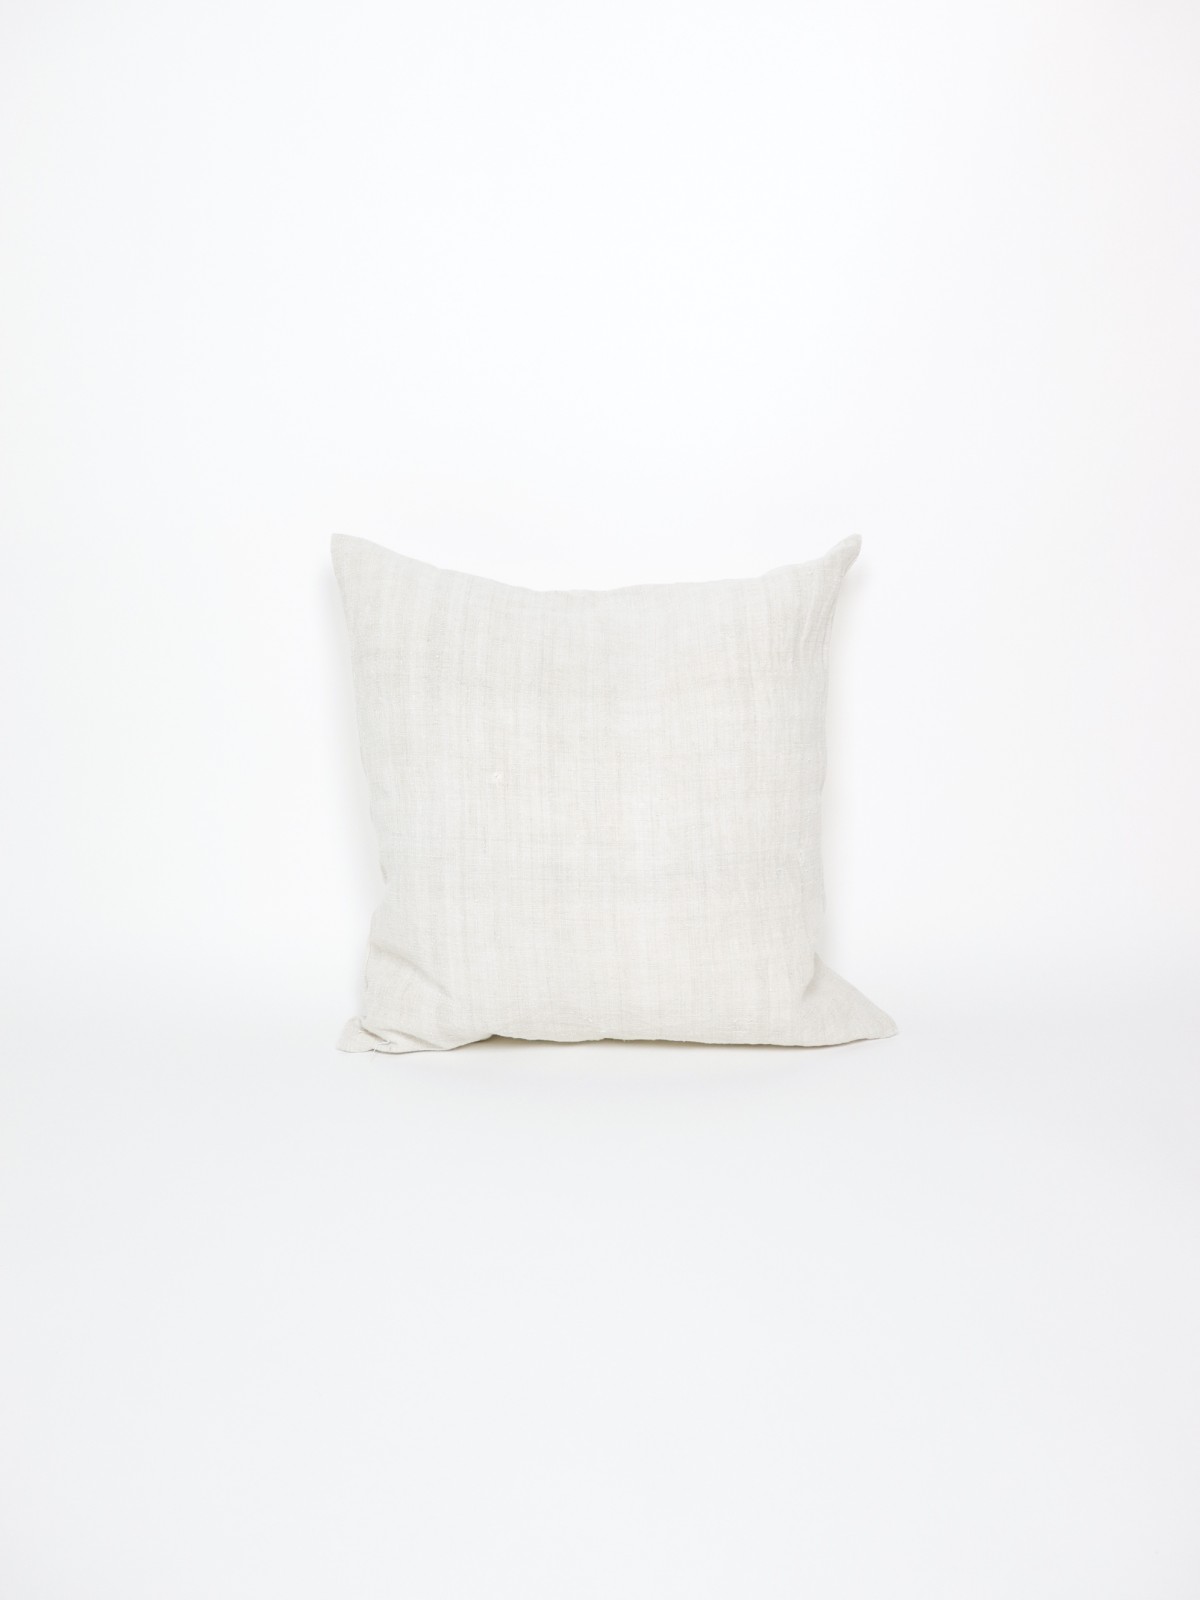 vintage french white linen fabric cushion, brown.remke cushion, sheet fabric